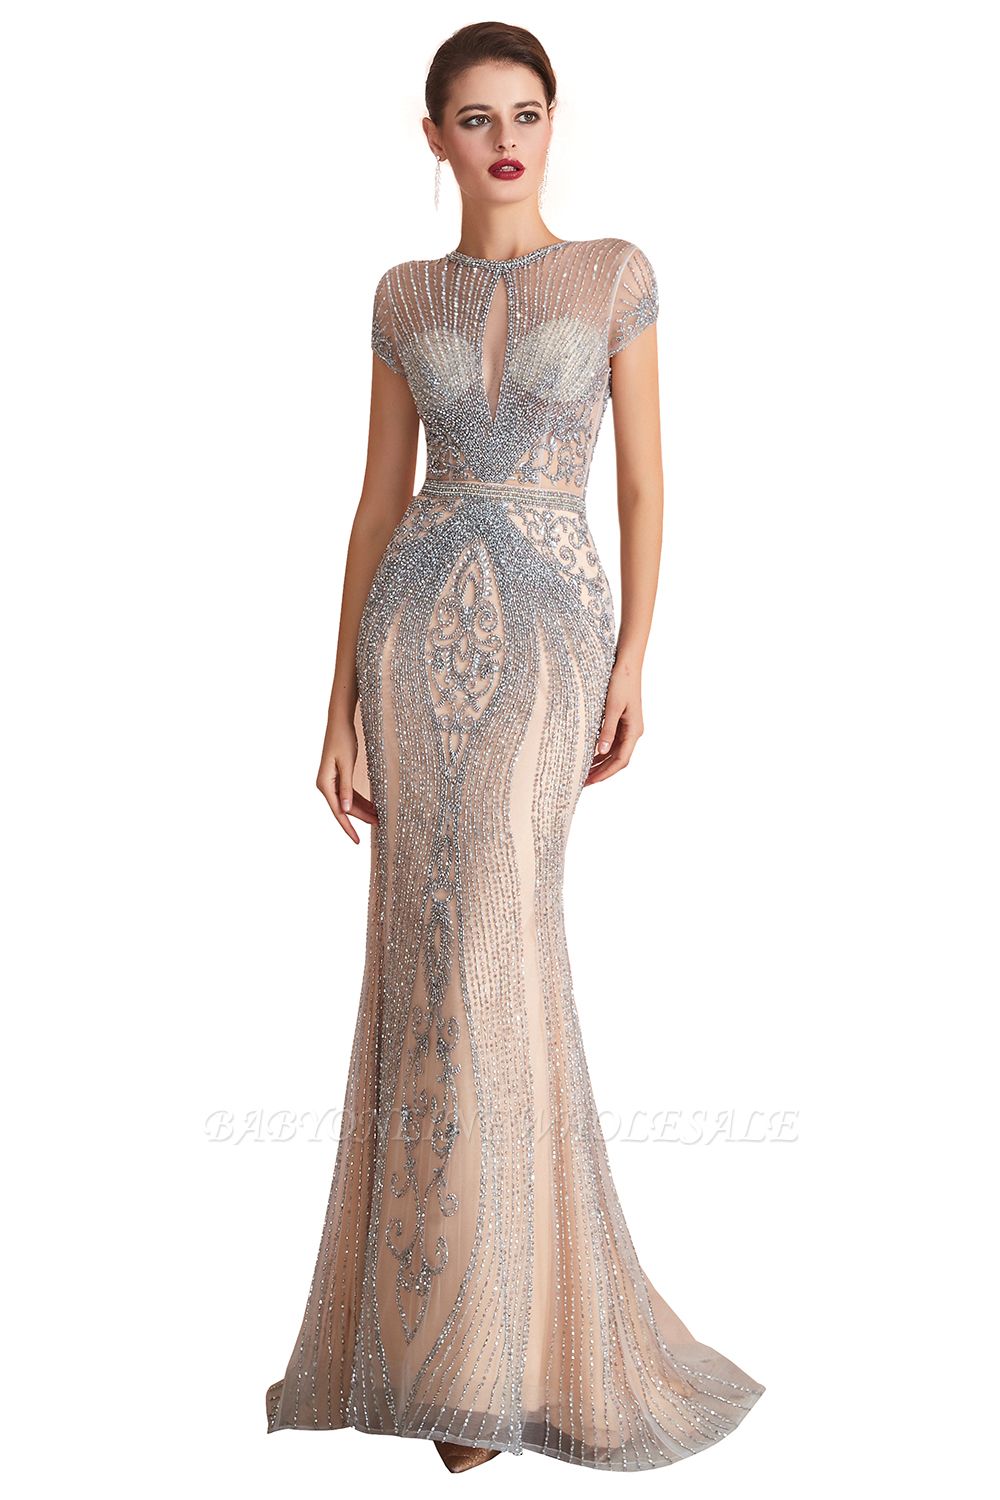 Chloe | Luxury Dark Navy Cap Sleeve Key hole Sparkle Prom Dress Online, Beautiful Champange Dresses for Evening Party